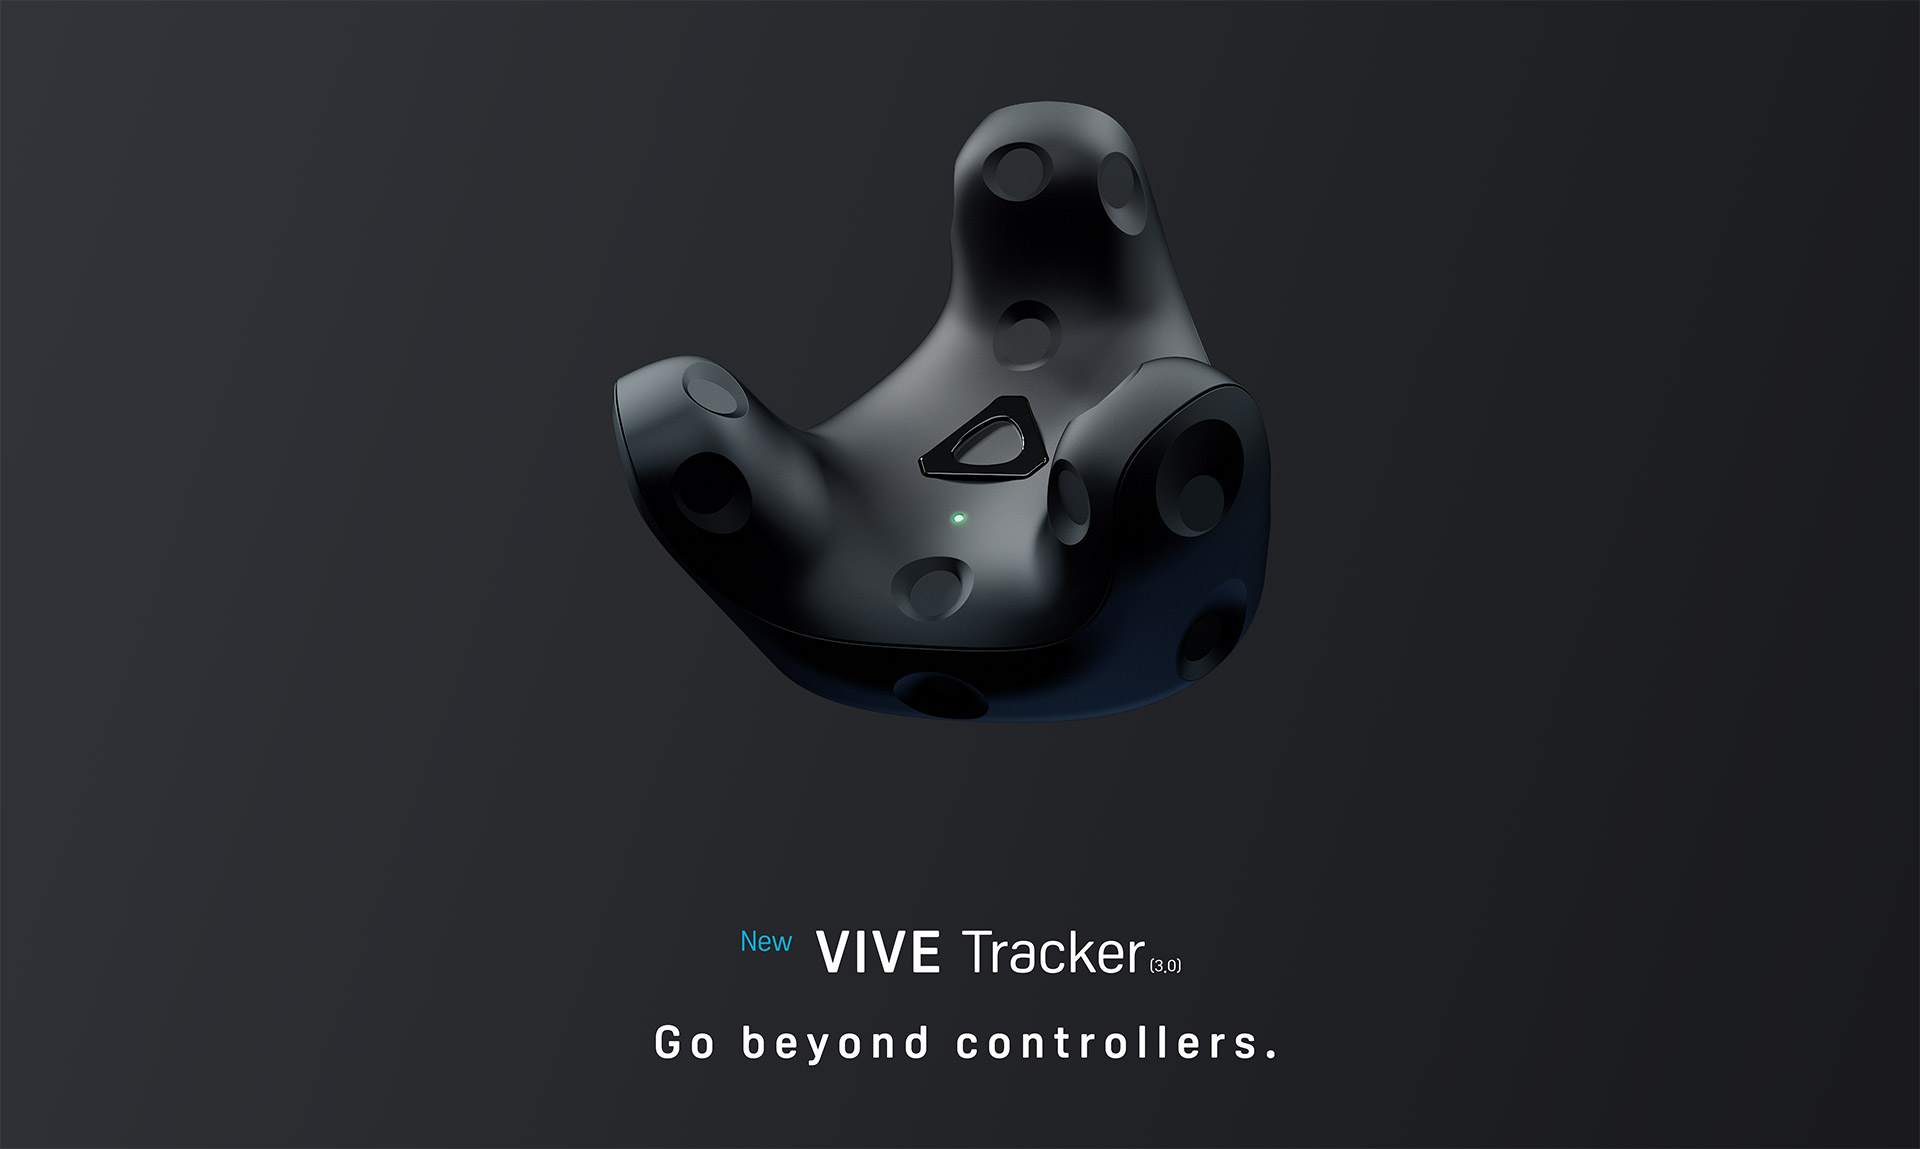 HTC VIVE Tracker 3.0